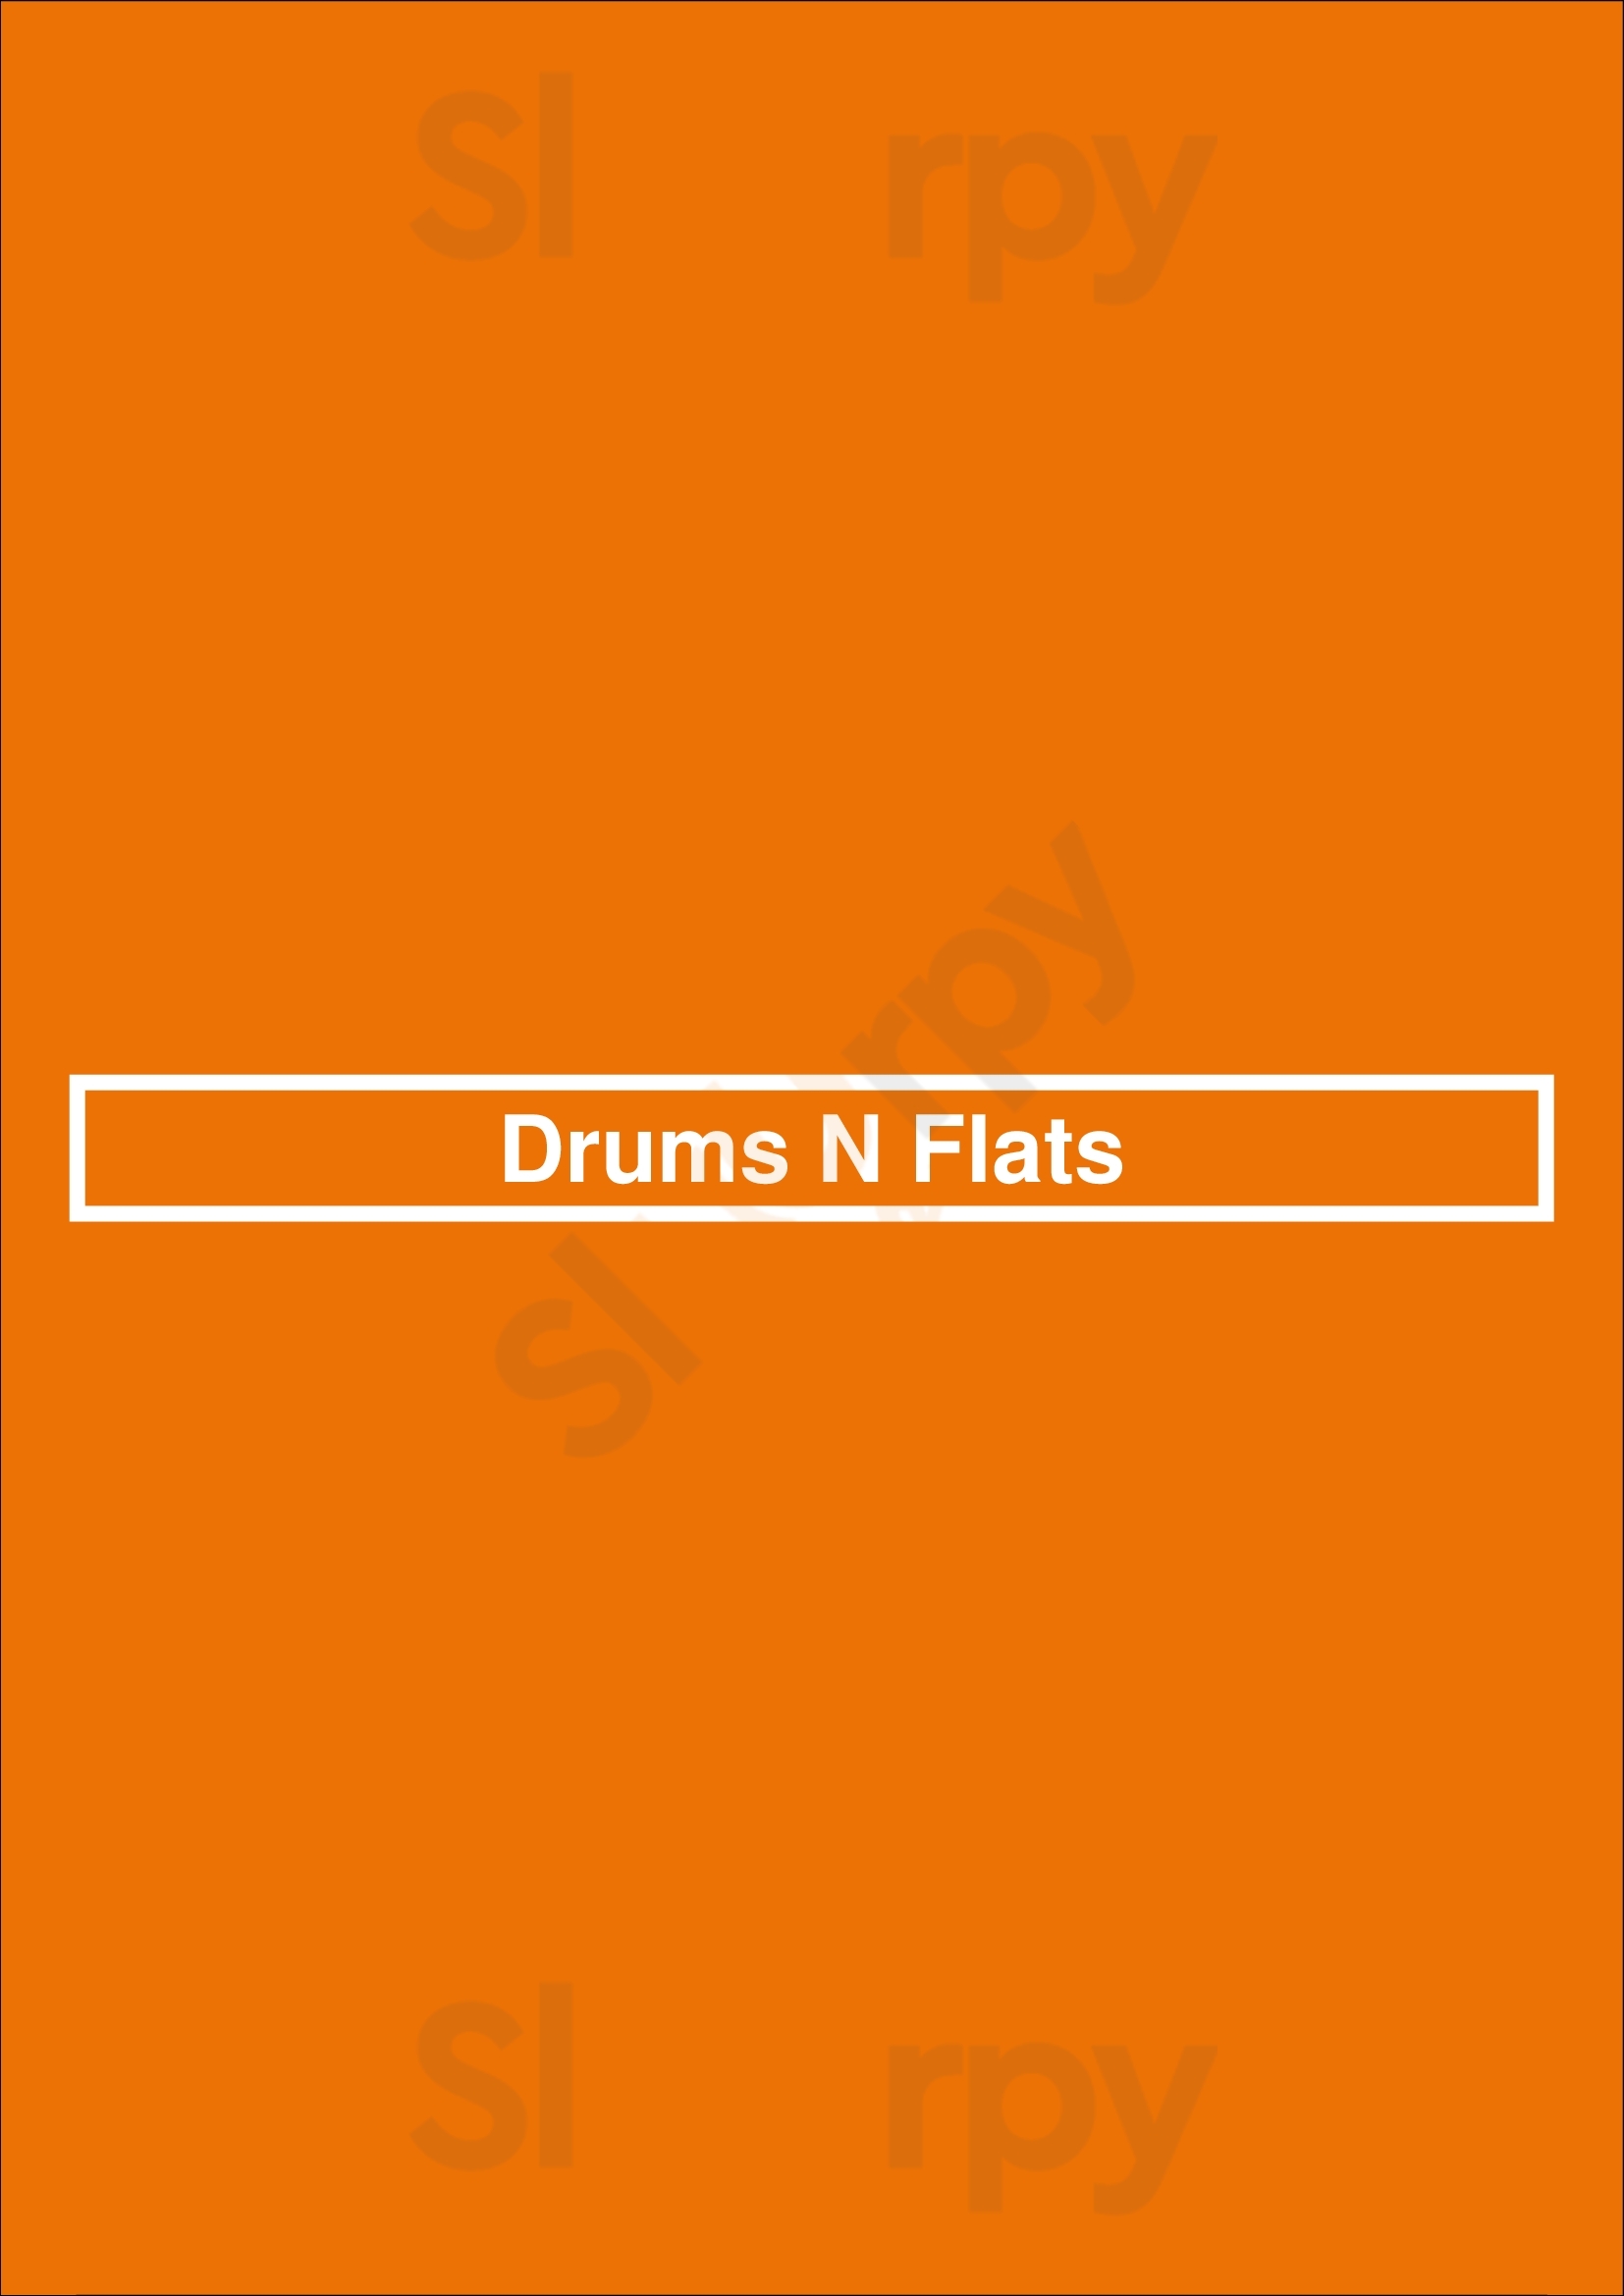 Drums N Flats Toronto Menu - 1